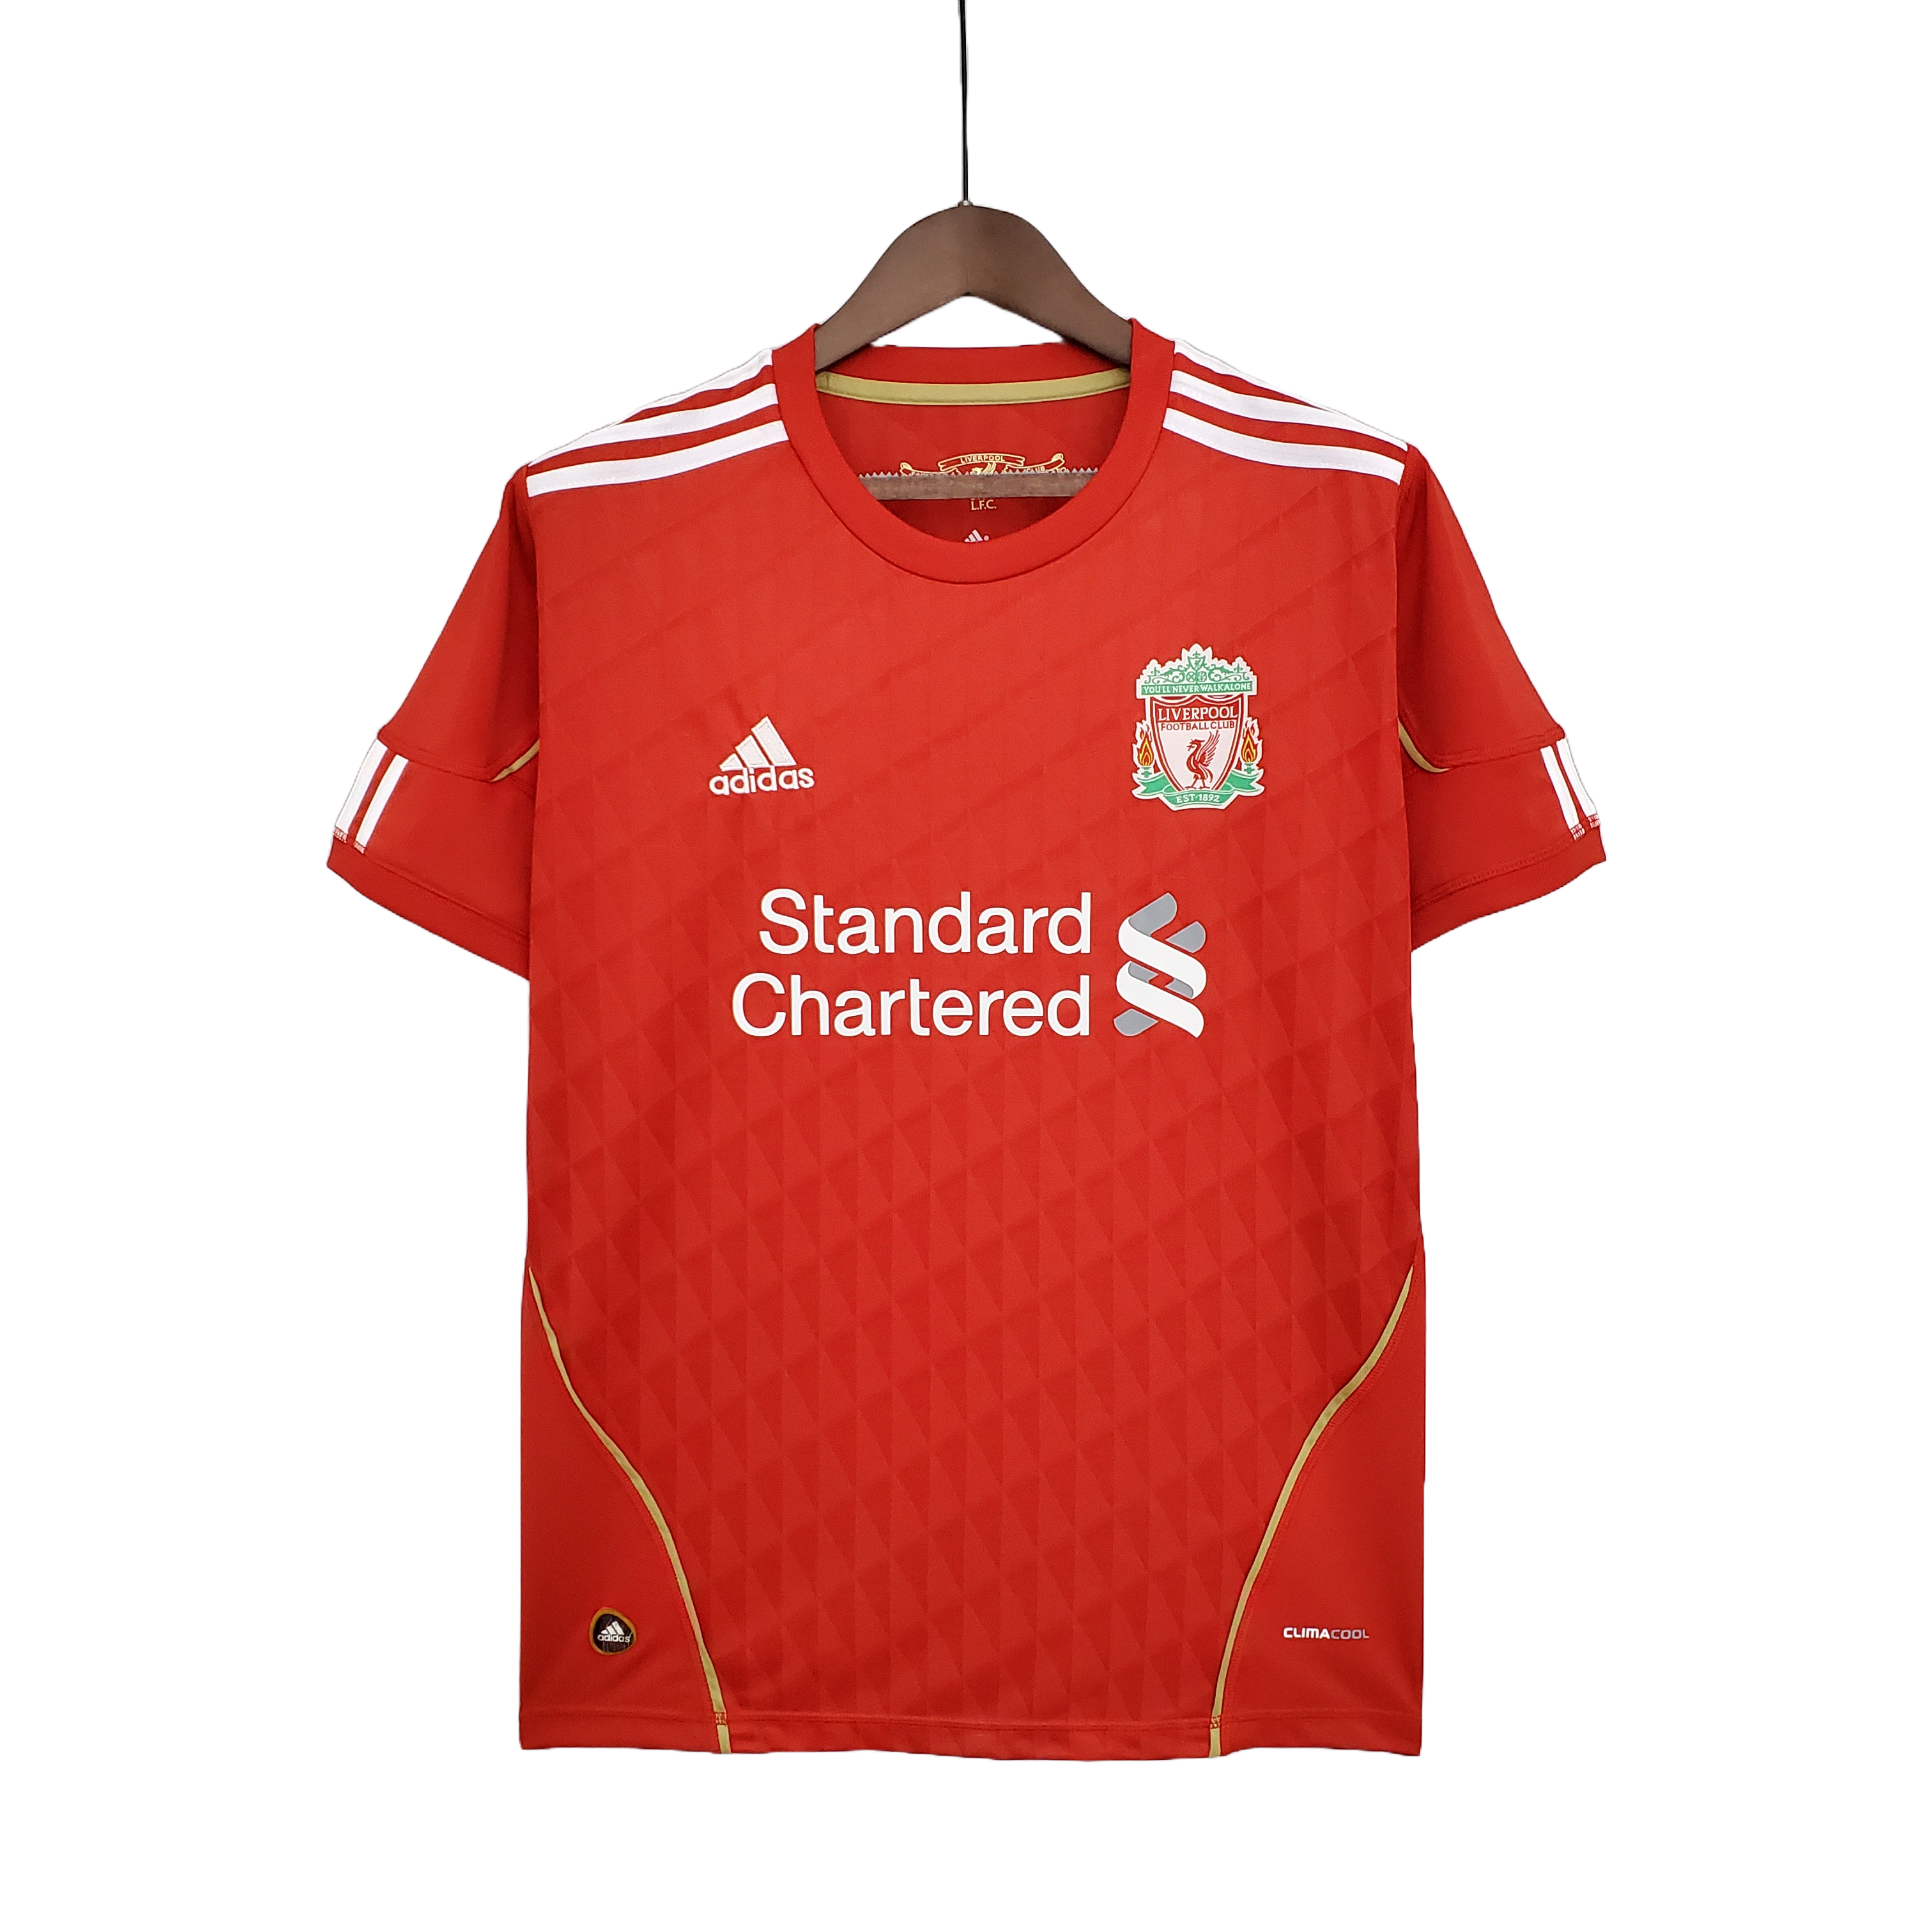 Liverpool 10/11 retro shirt 